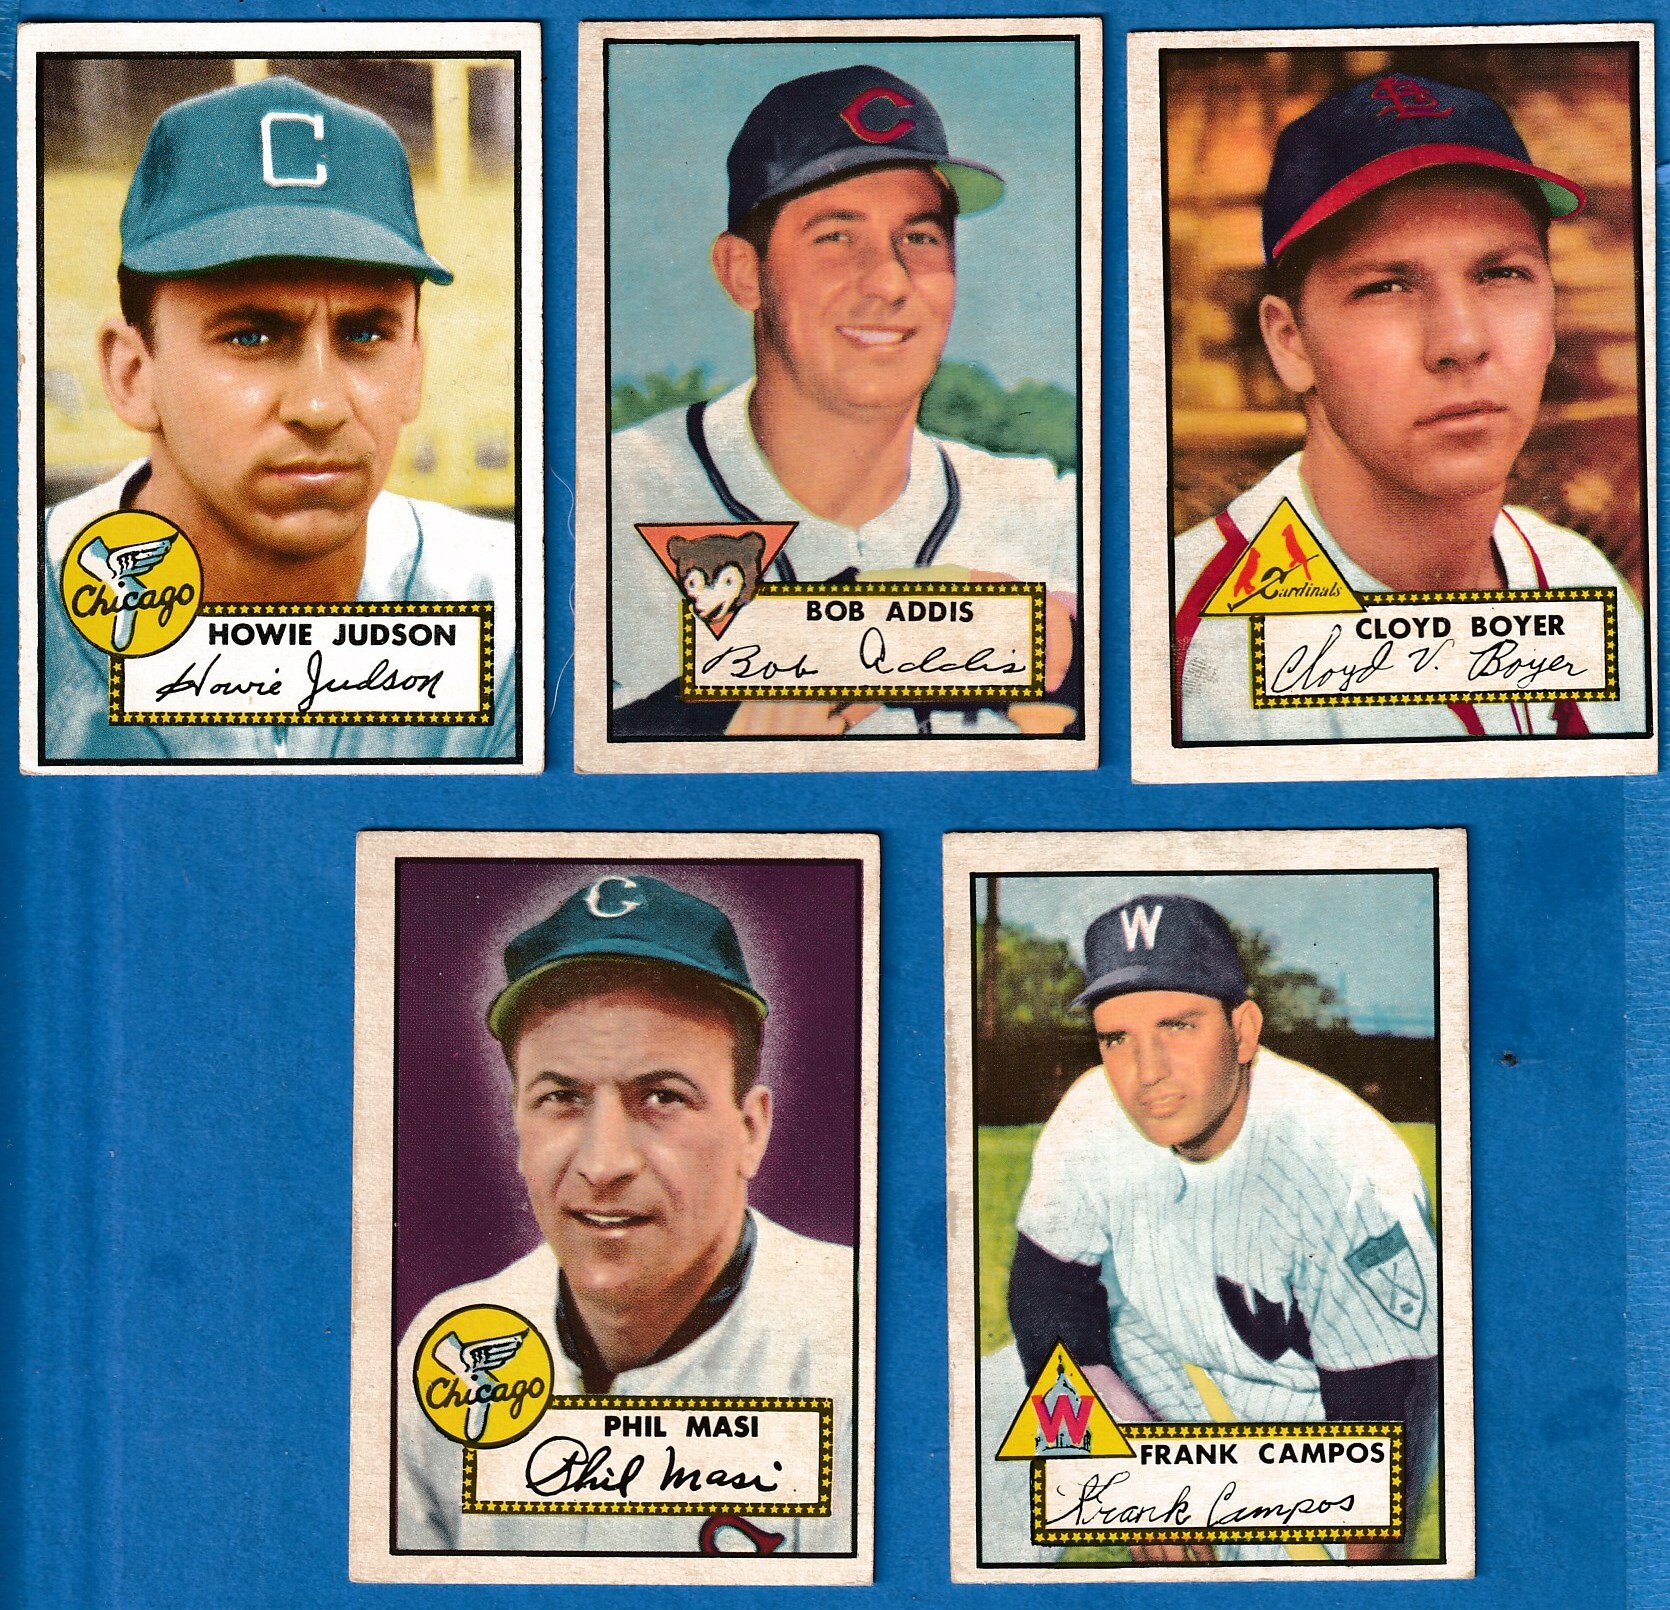 1952 Topps #283 Phil Masi SHORT PRINT (White Sox) Baseball cards value